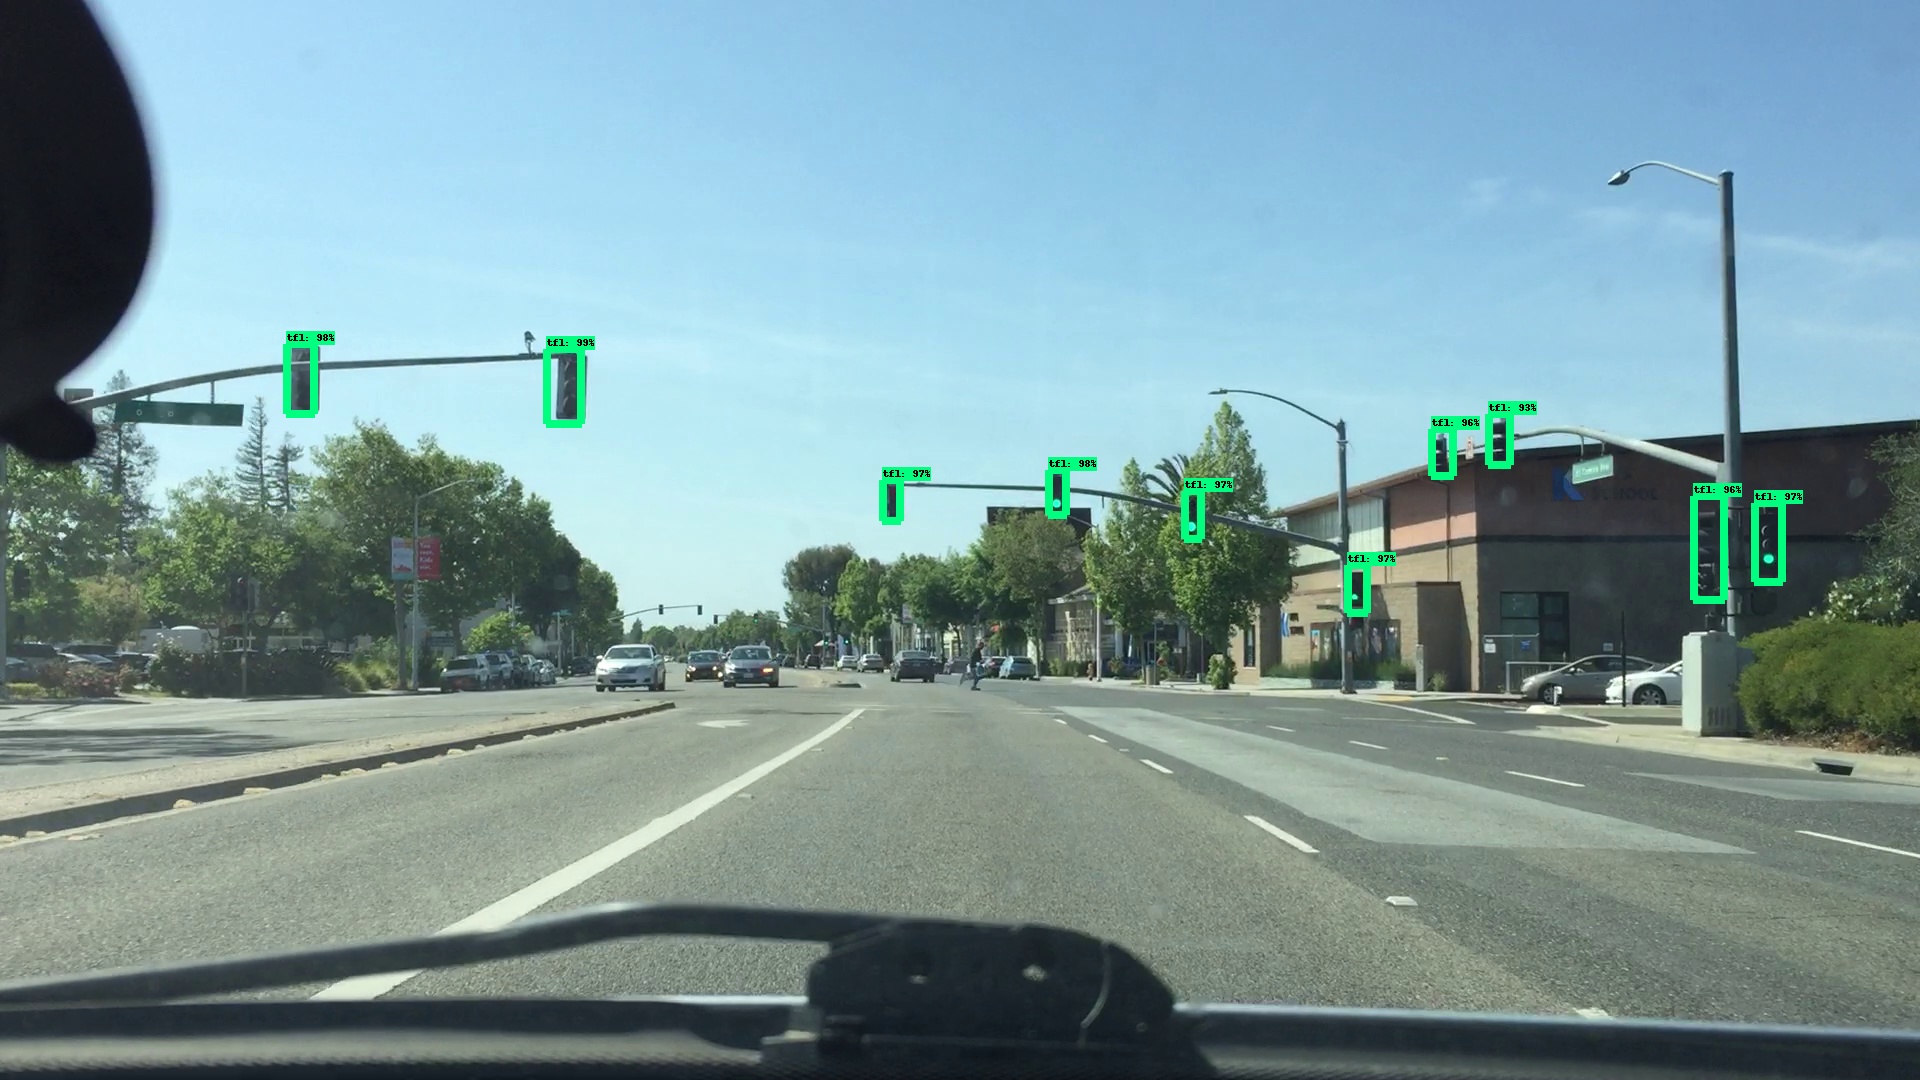 Traffic light recognition